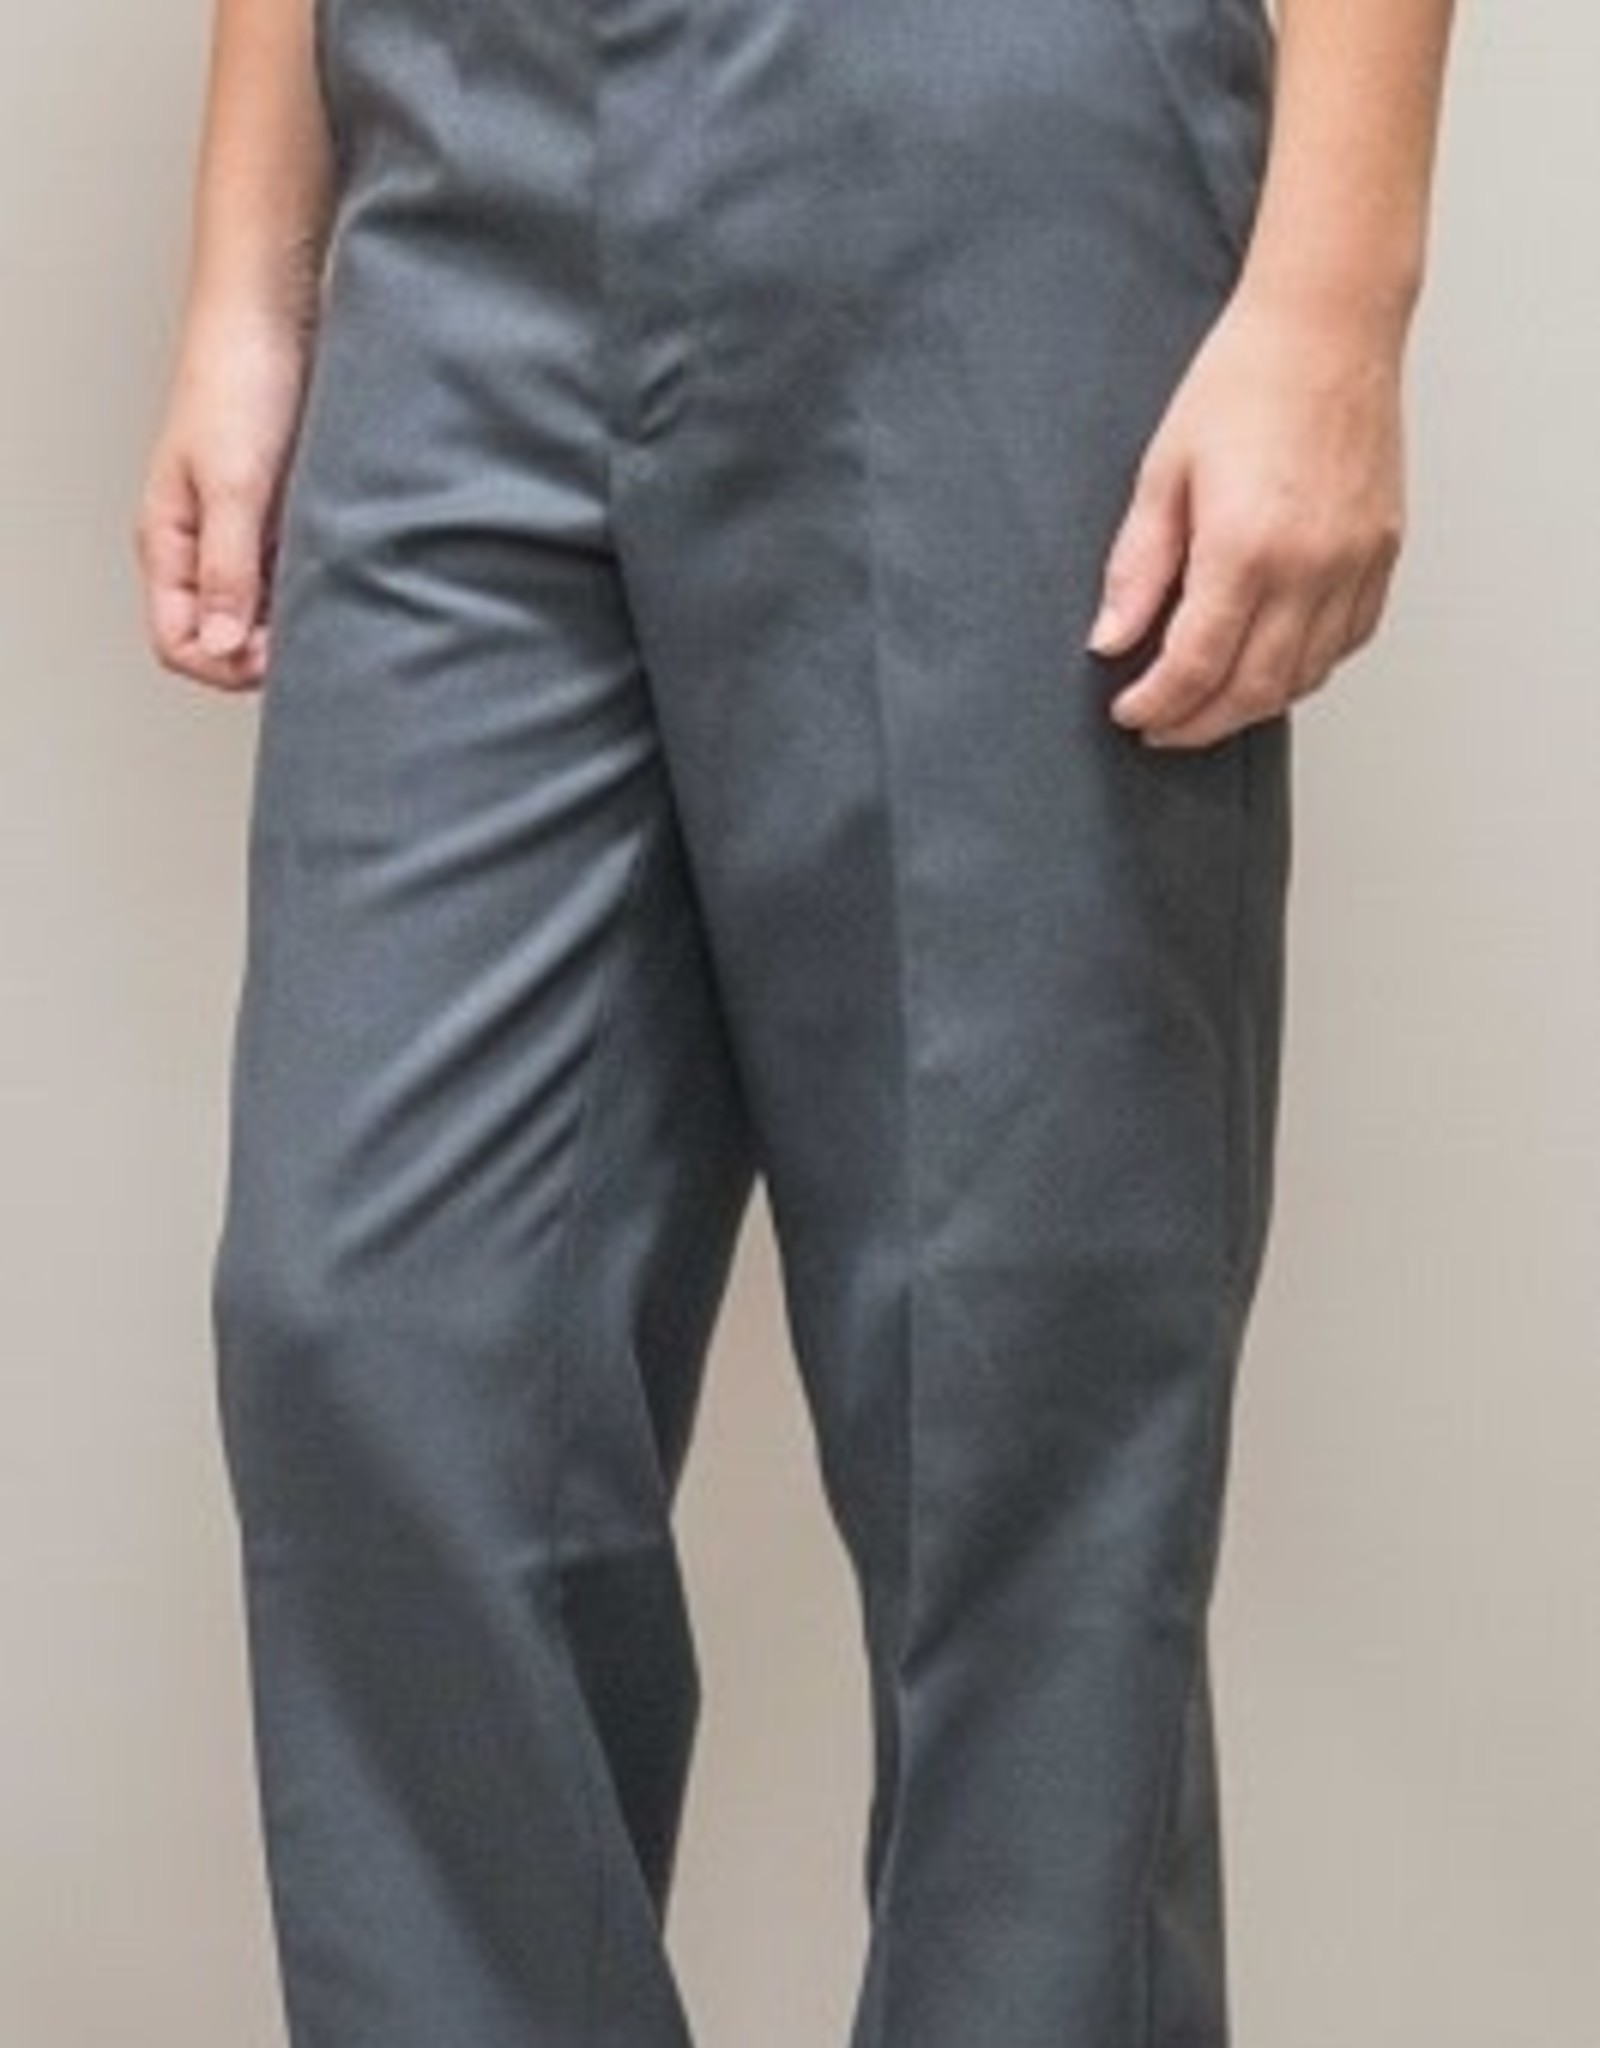 Grey Dress Pants Adjustable Waist Youth